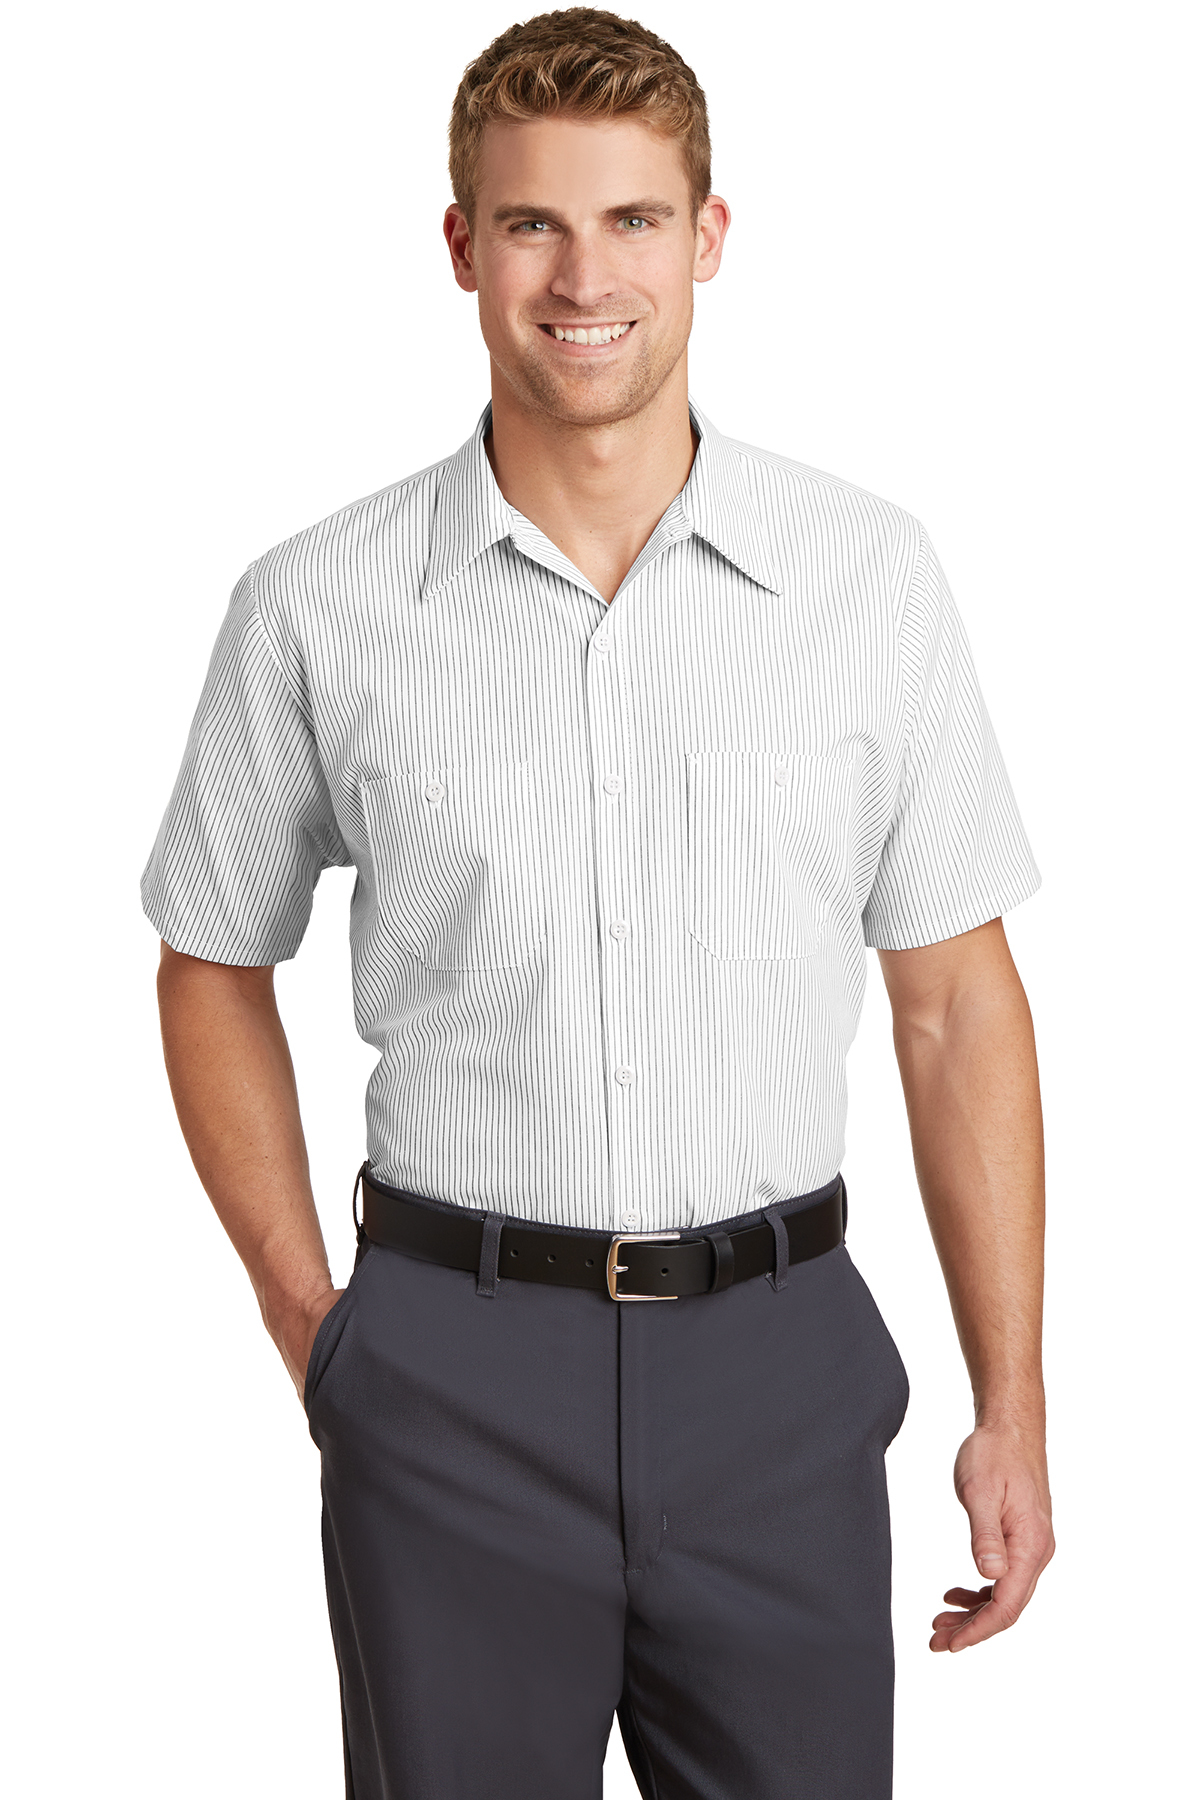 Red Kap Short Sleeve Striped Industrial Work Shirt | Product | SanMar